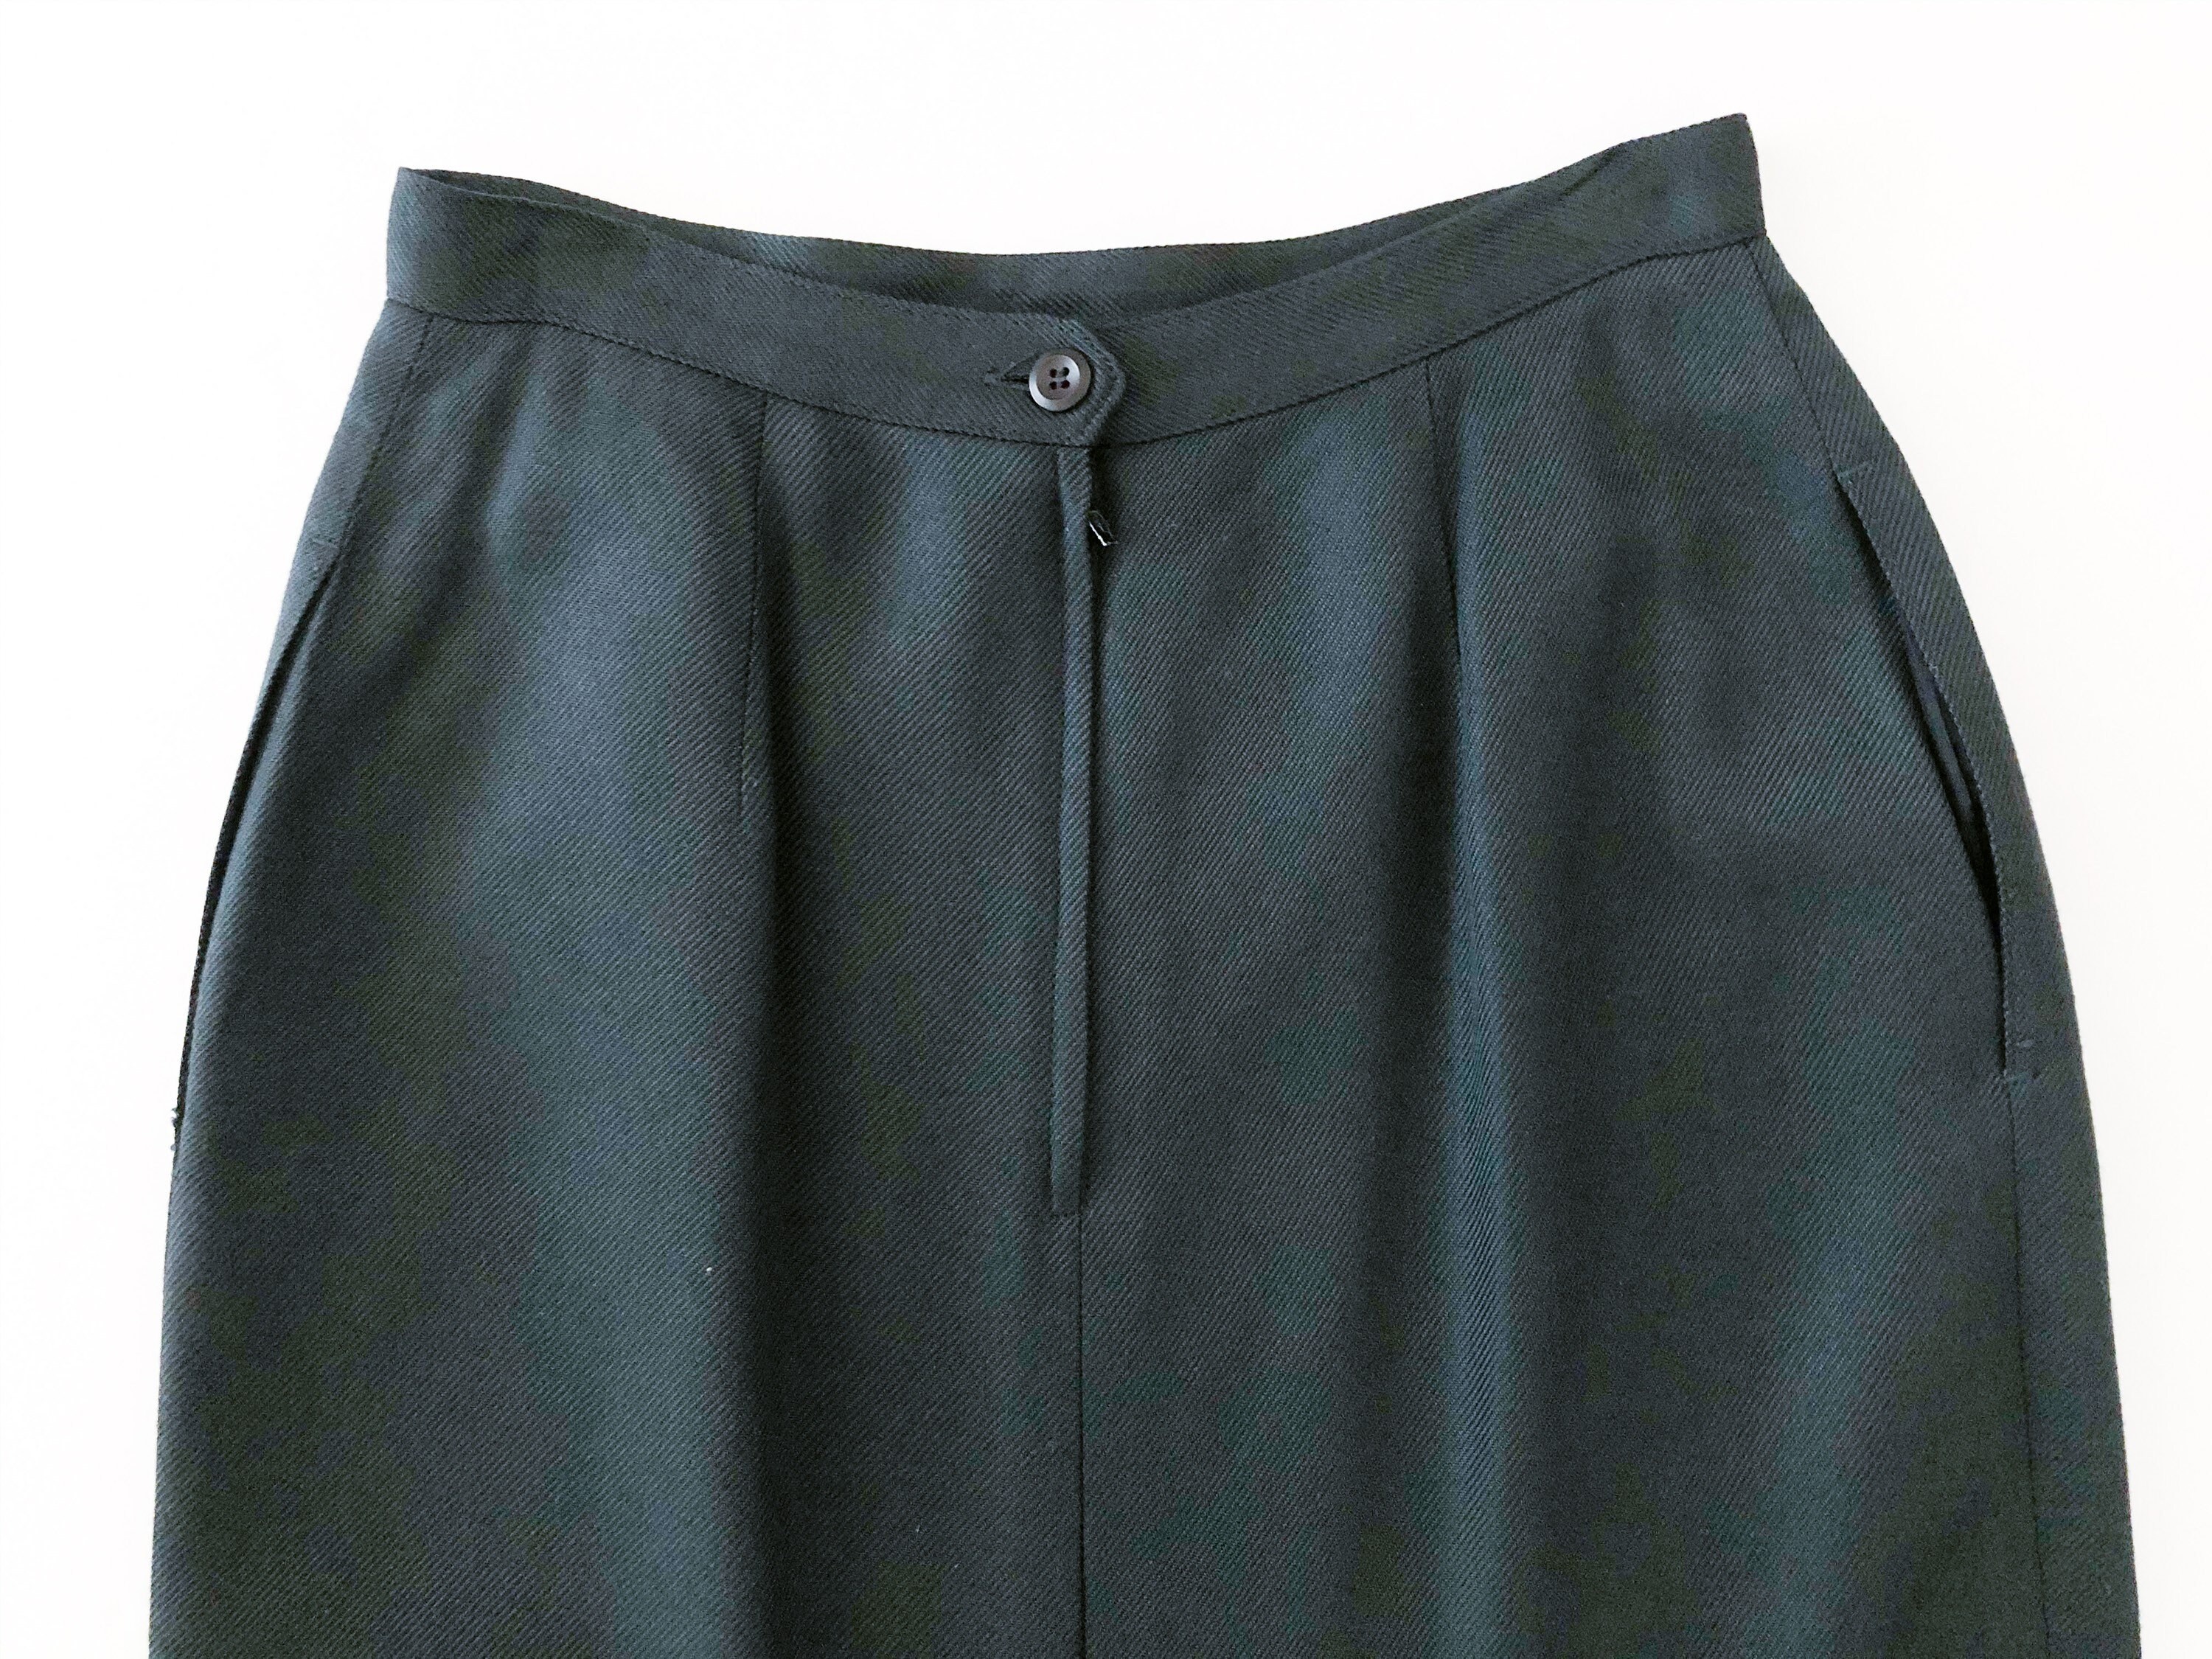 Vintage 1990s Dark Green Midi Skirt With Pockets Vintage Dark | Etsy